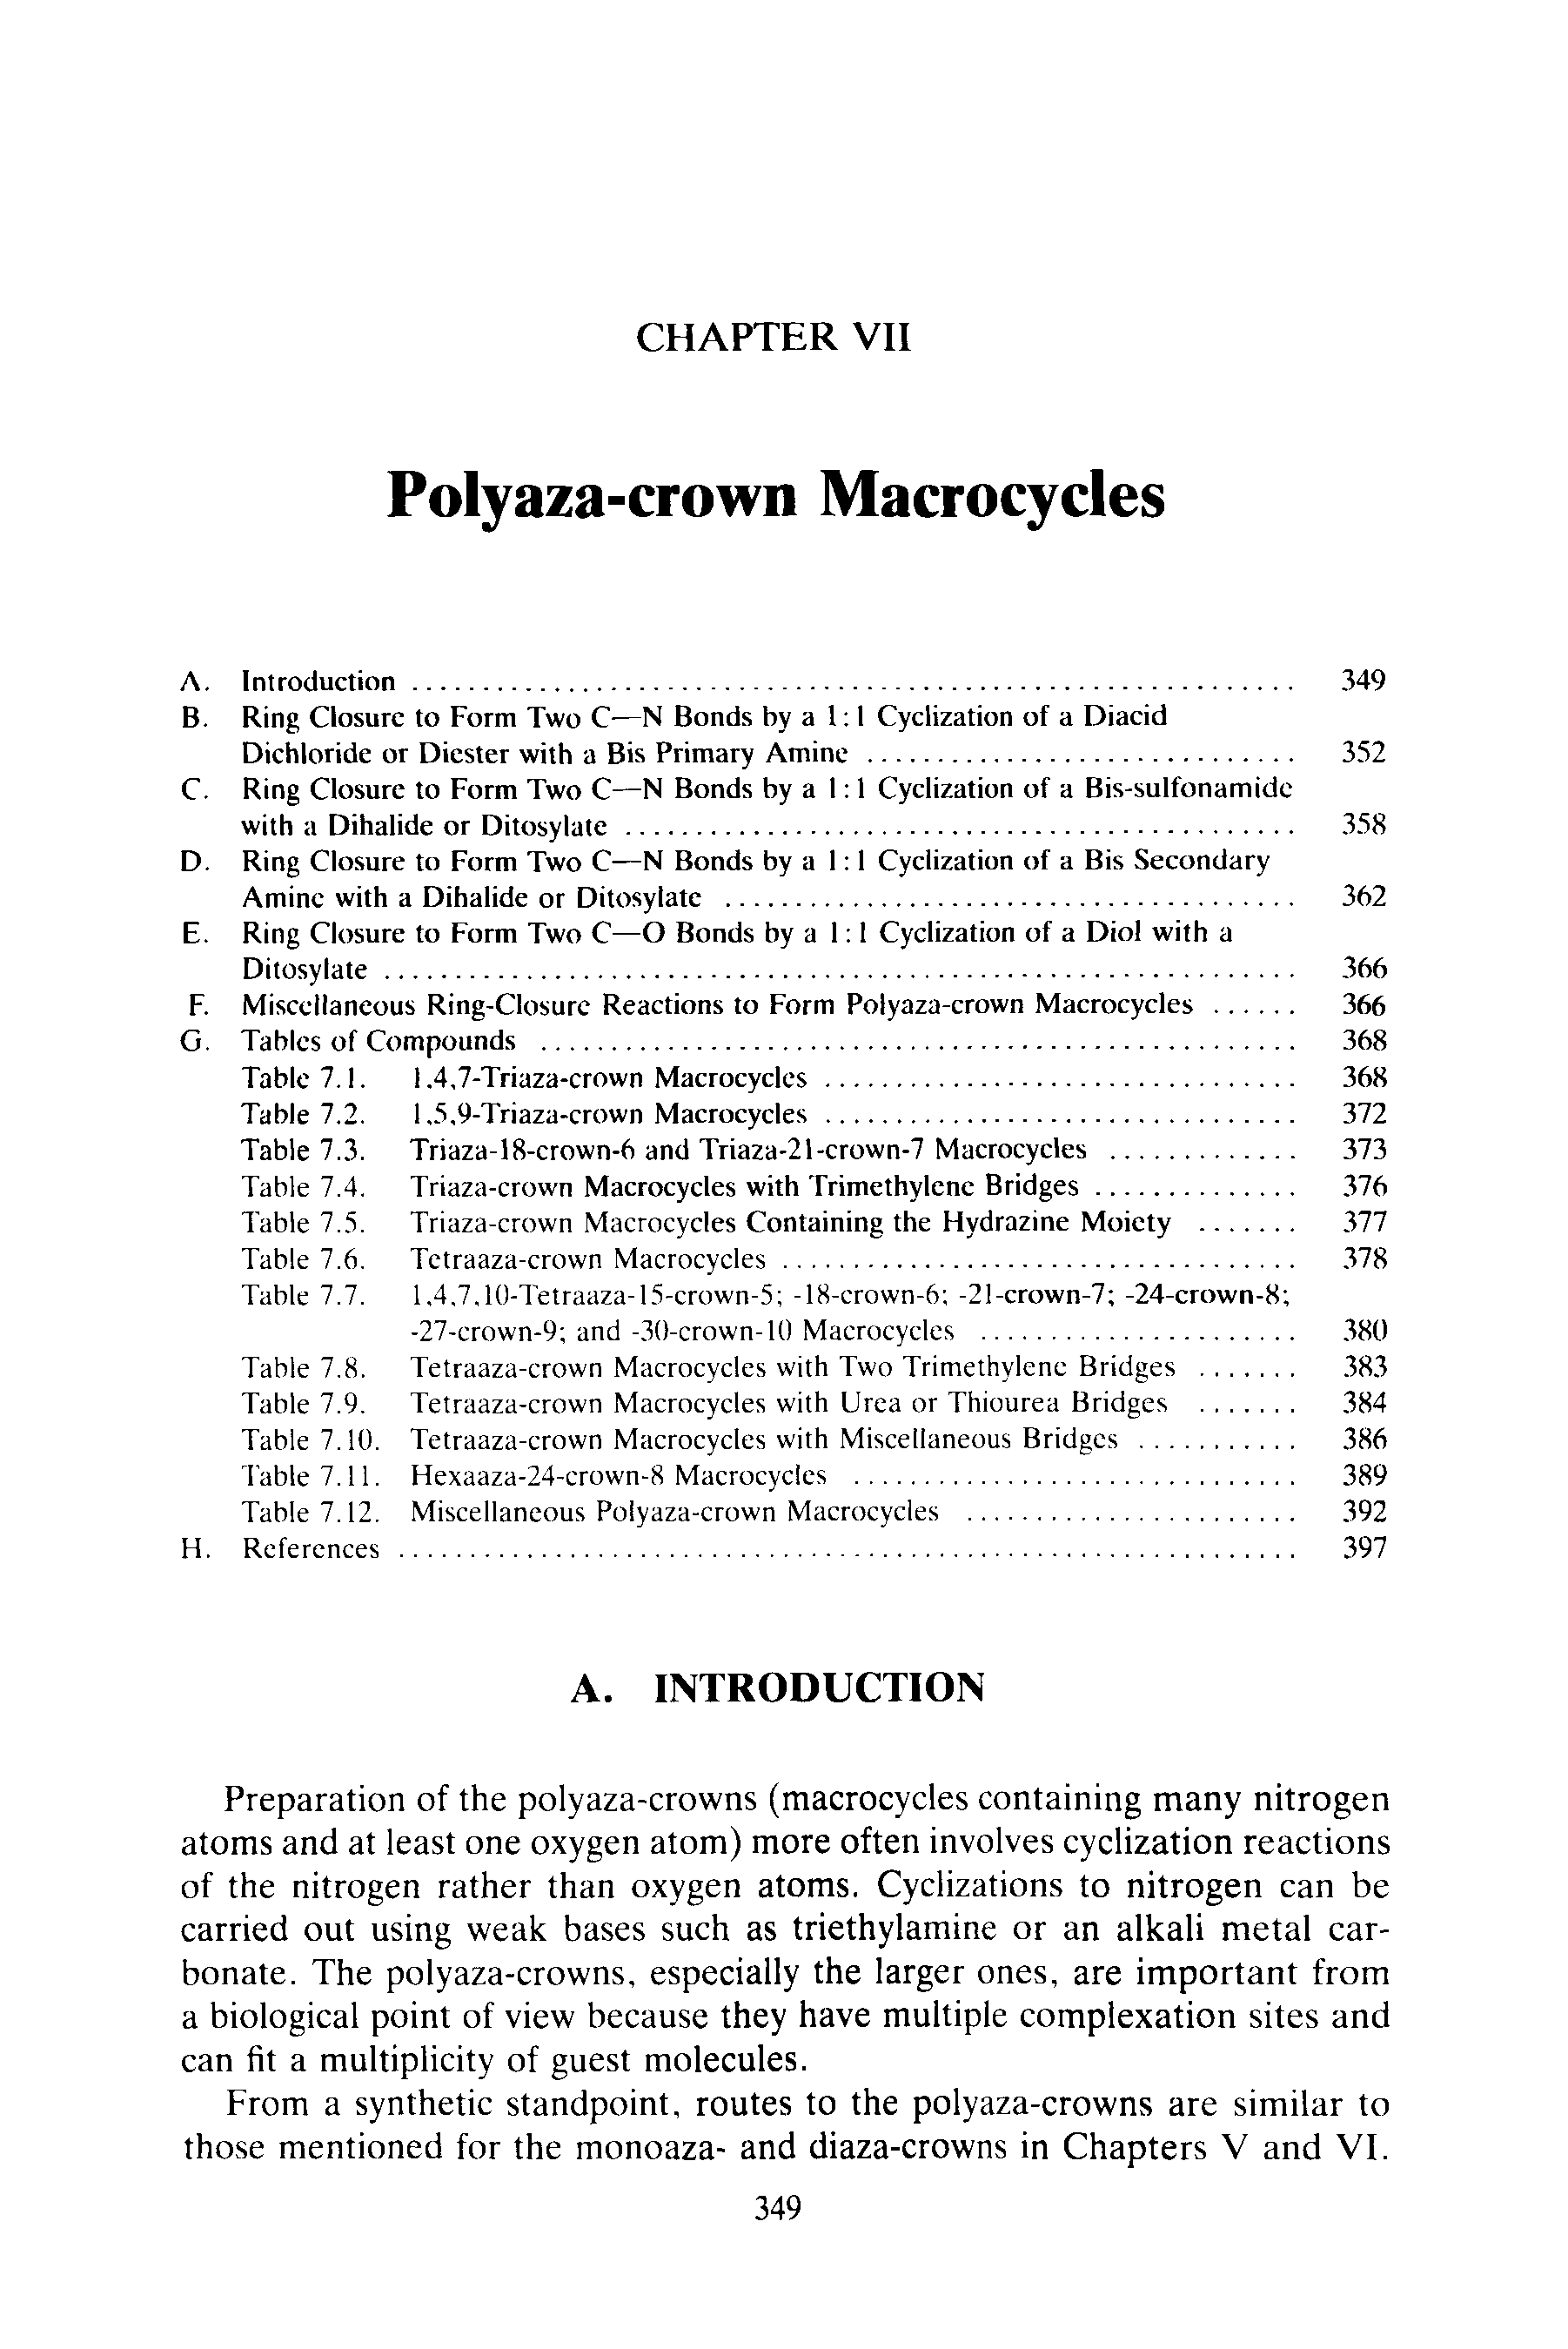 Table 7.9. Tetraaza-crown Macrocycles with Urea or Thiourea Bridges. 384...